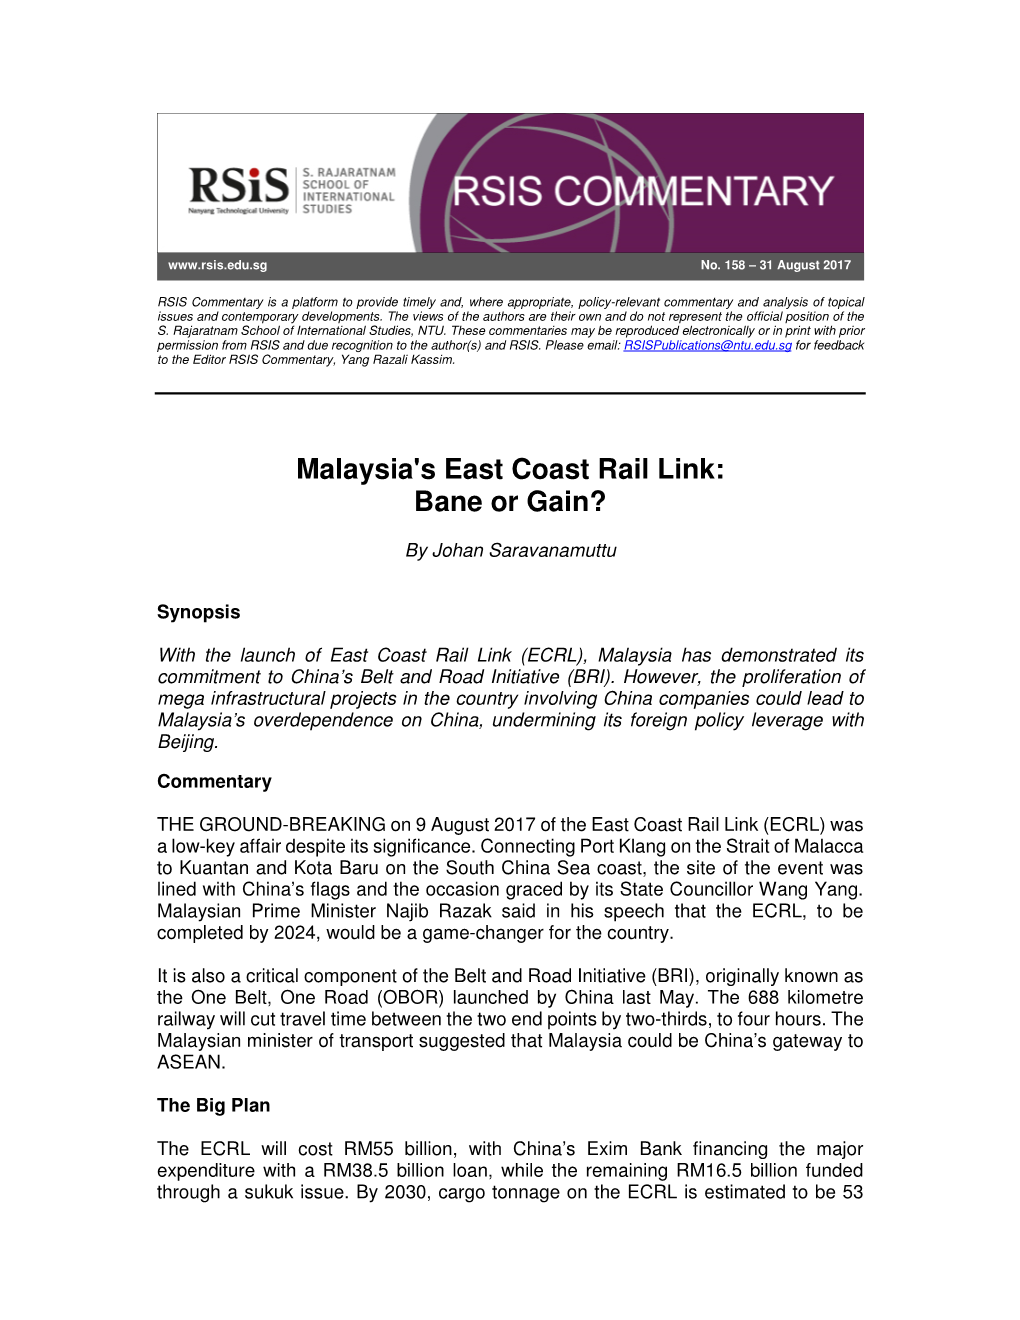 Malaysia's East Coast Rail Link: Bane Or Gain?